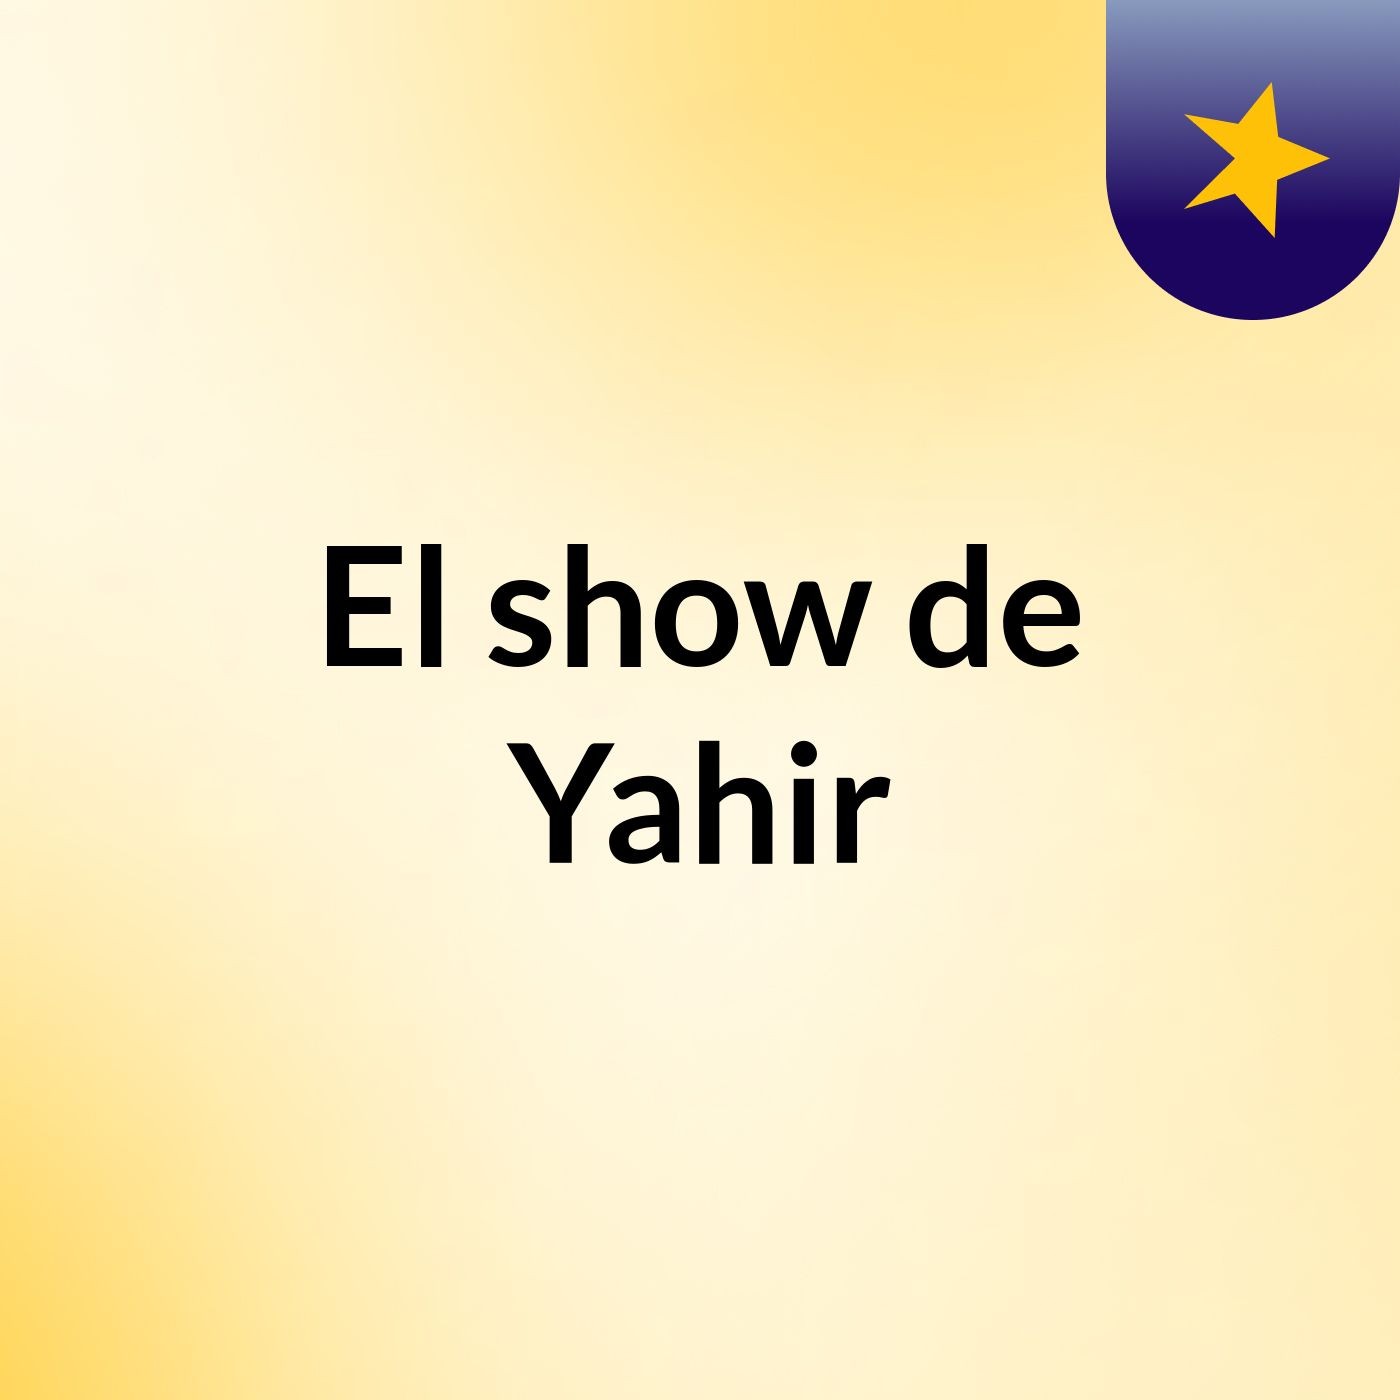 El show de Yahir